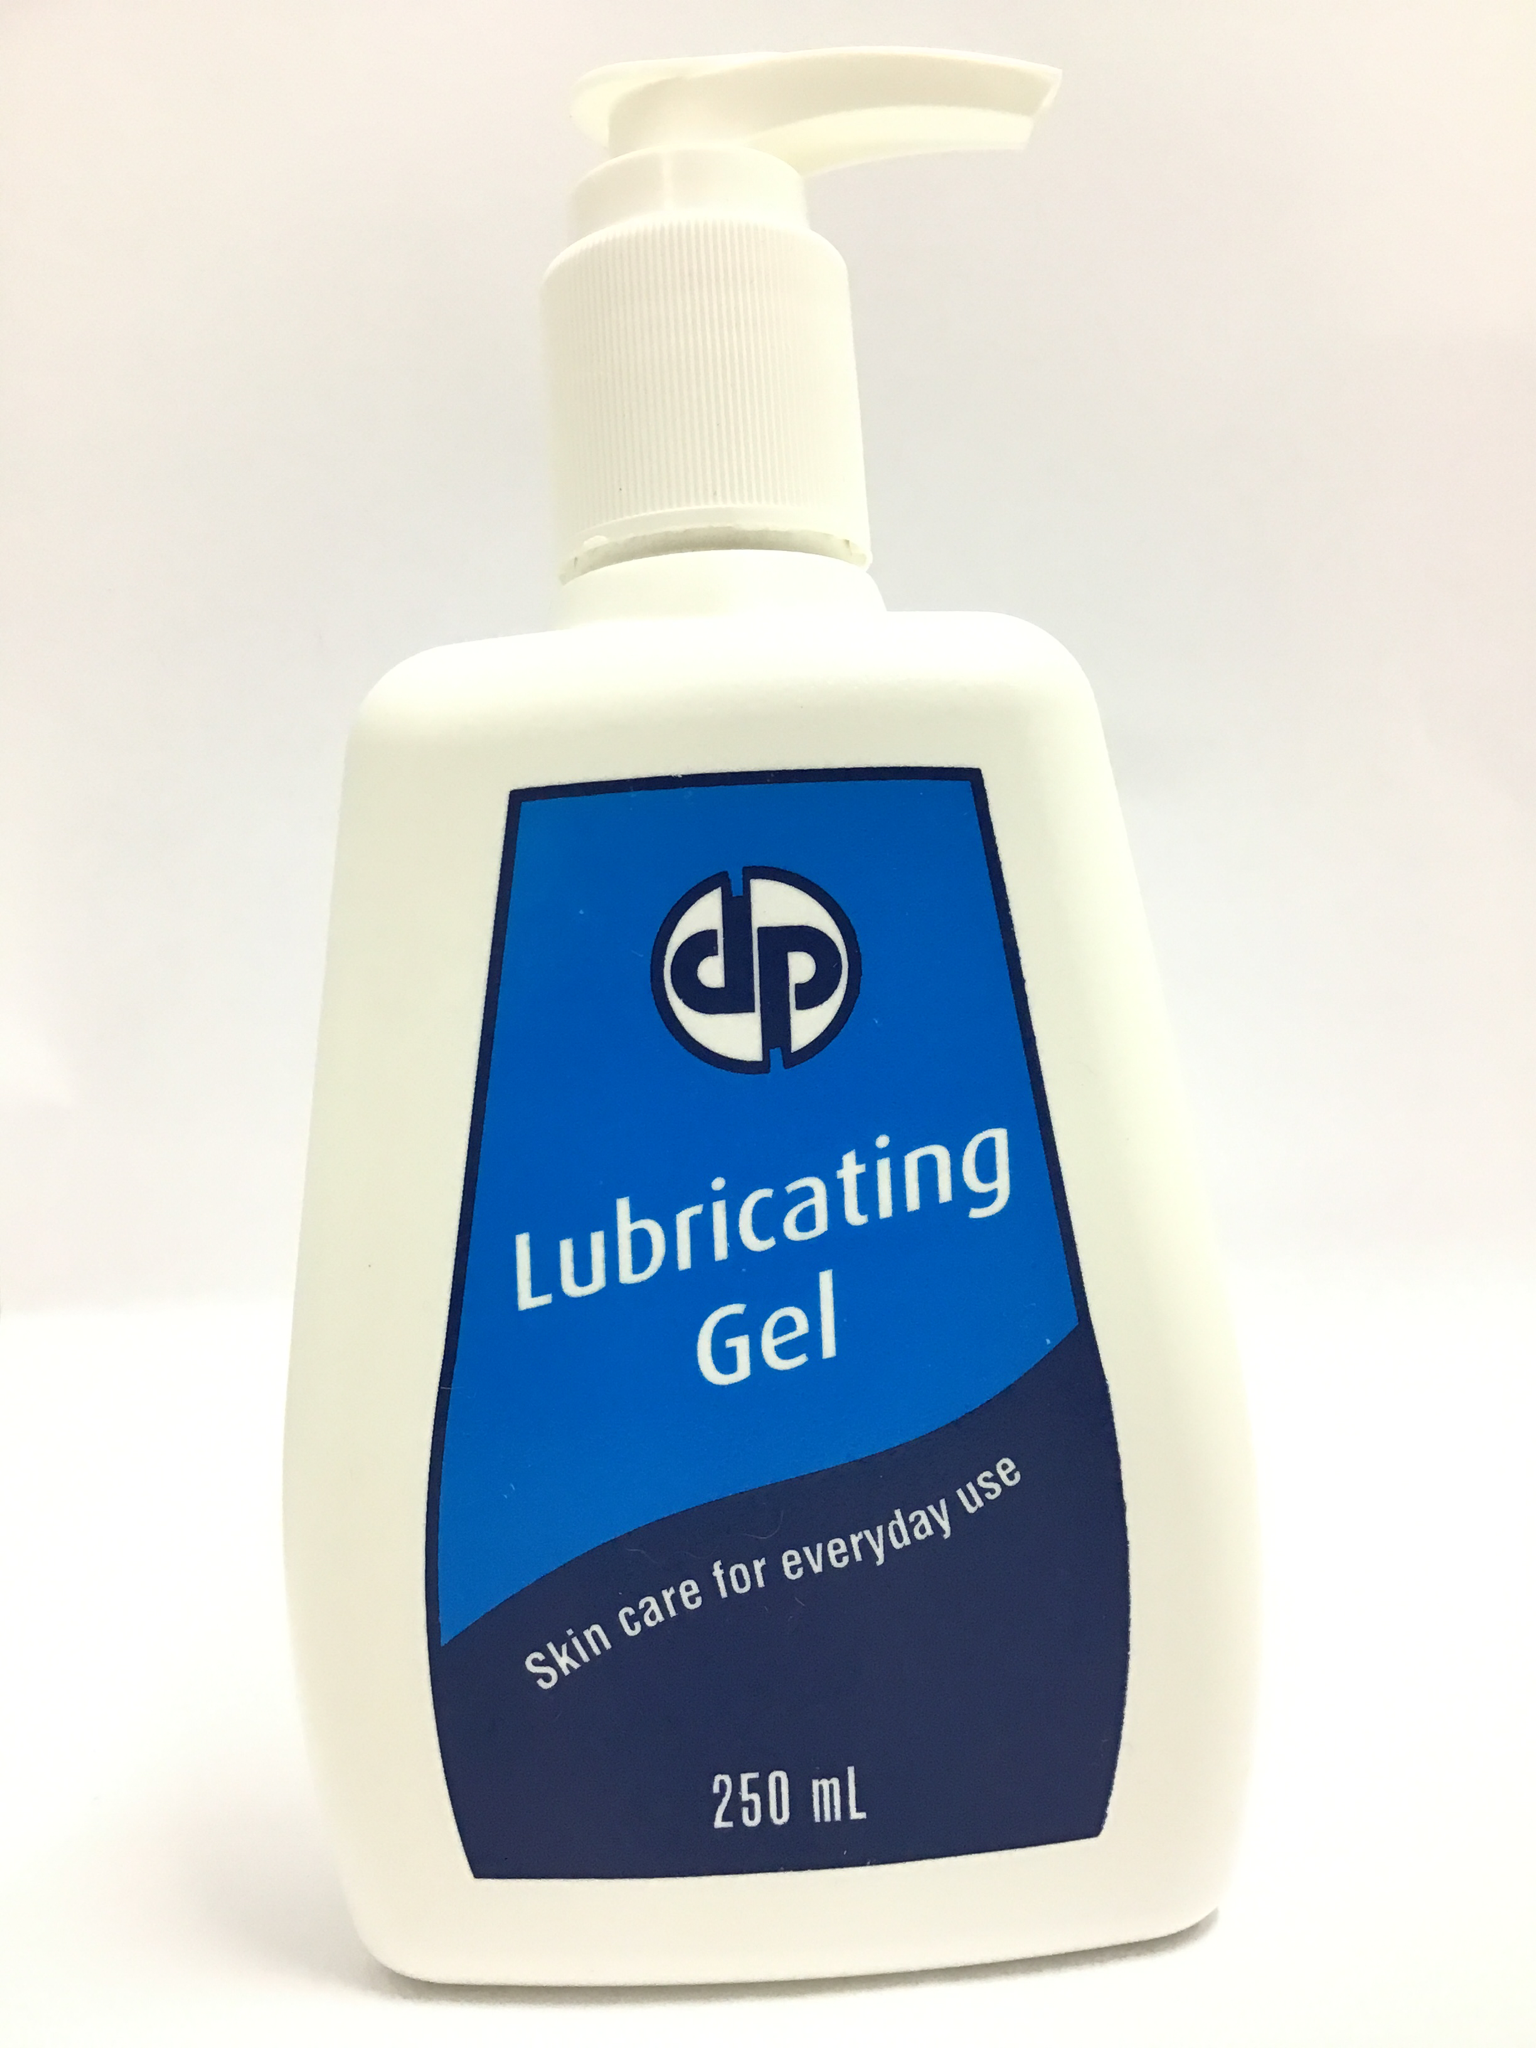 DP Lubricating Gel skin care for everyday use 250 ml - Pakuranga Pharmacy